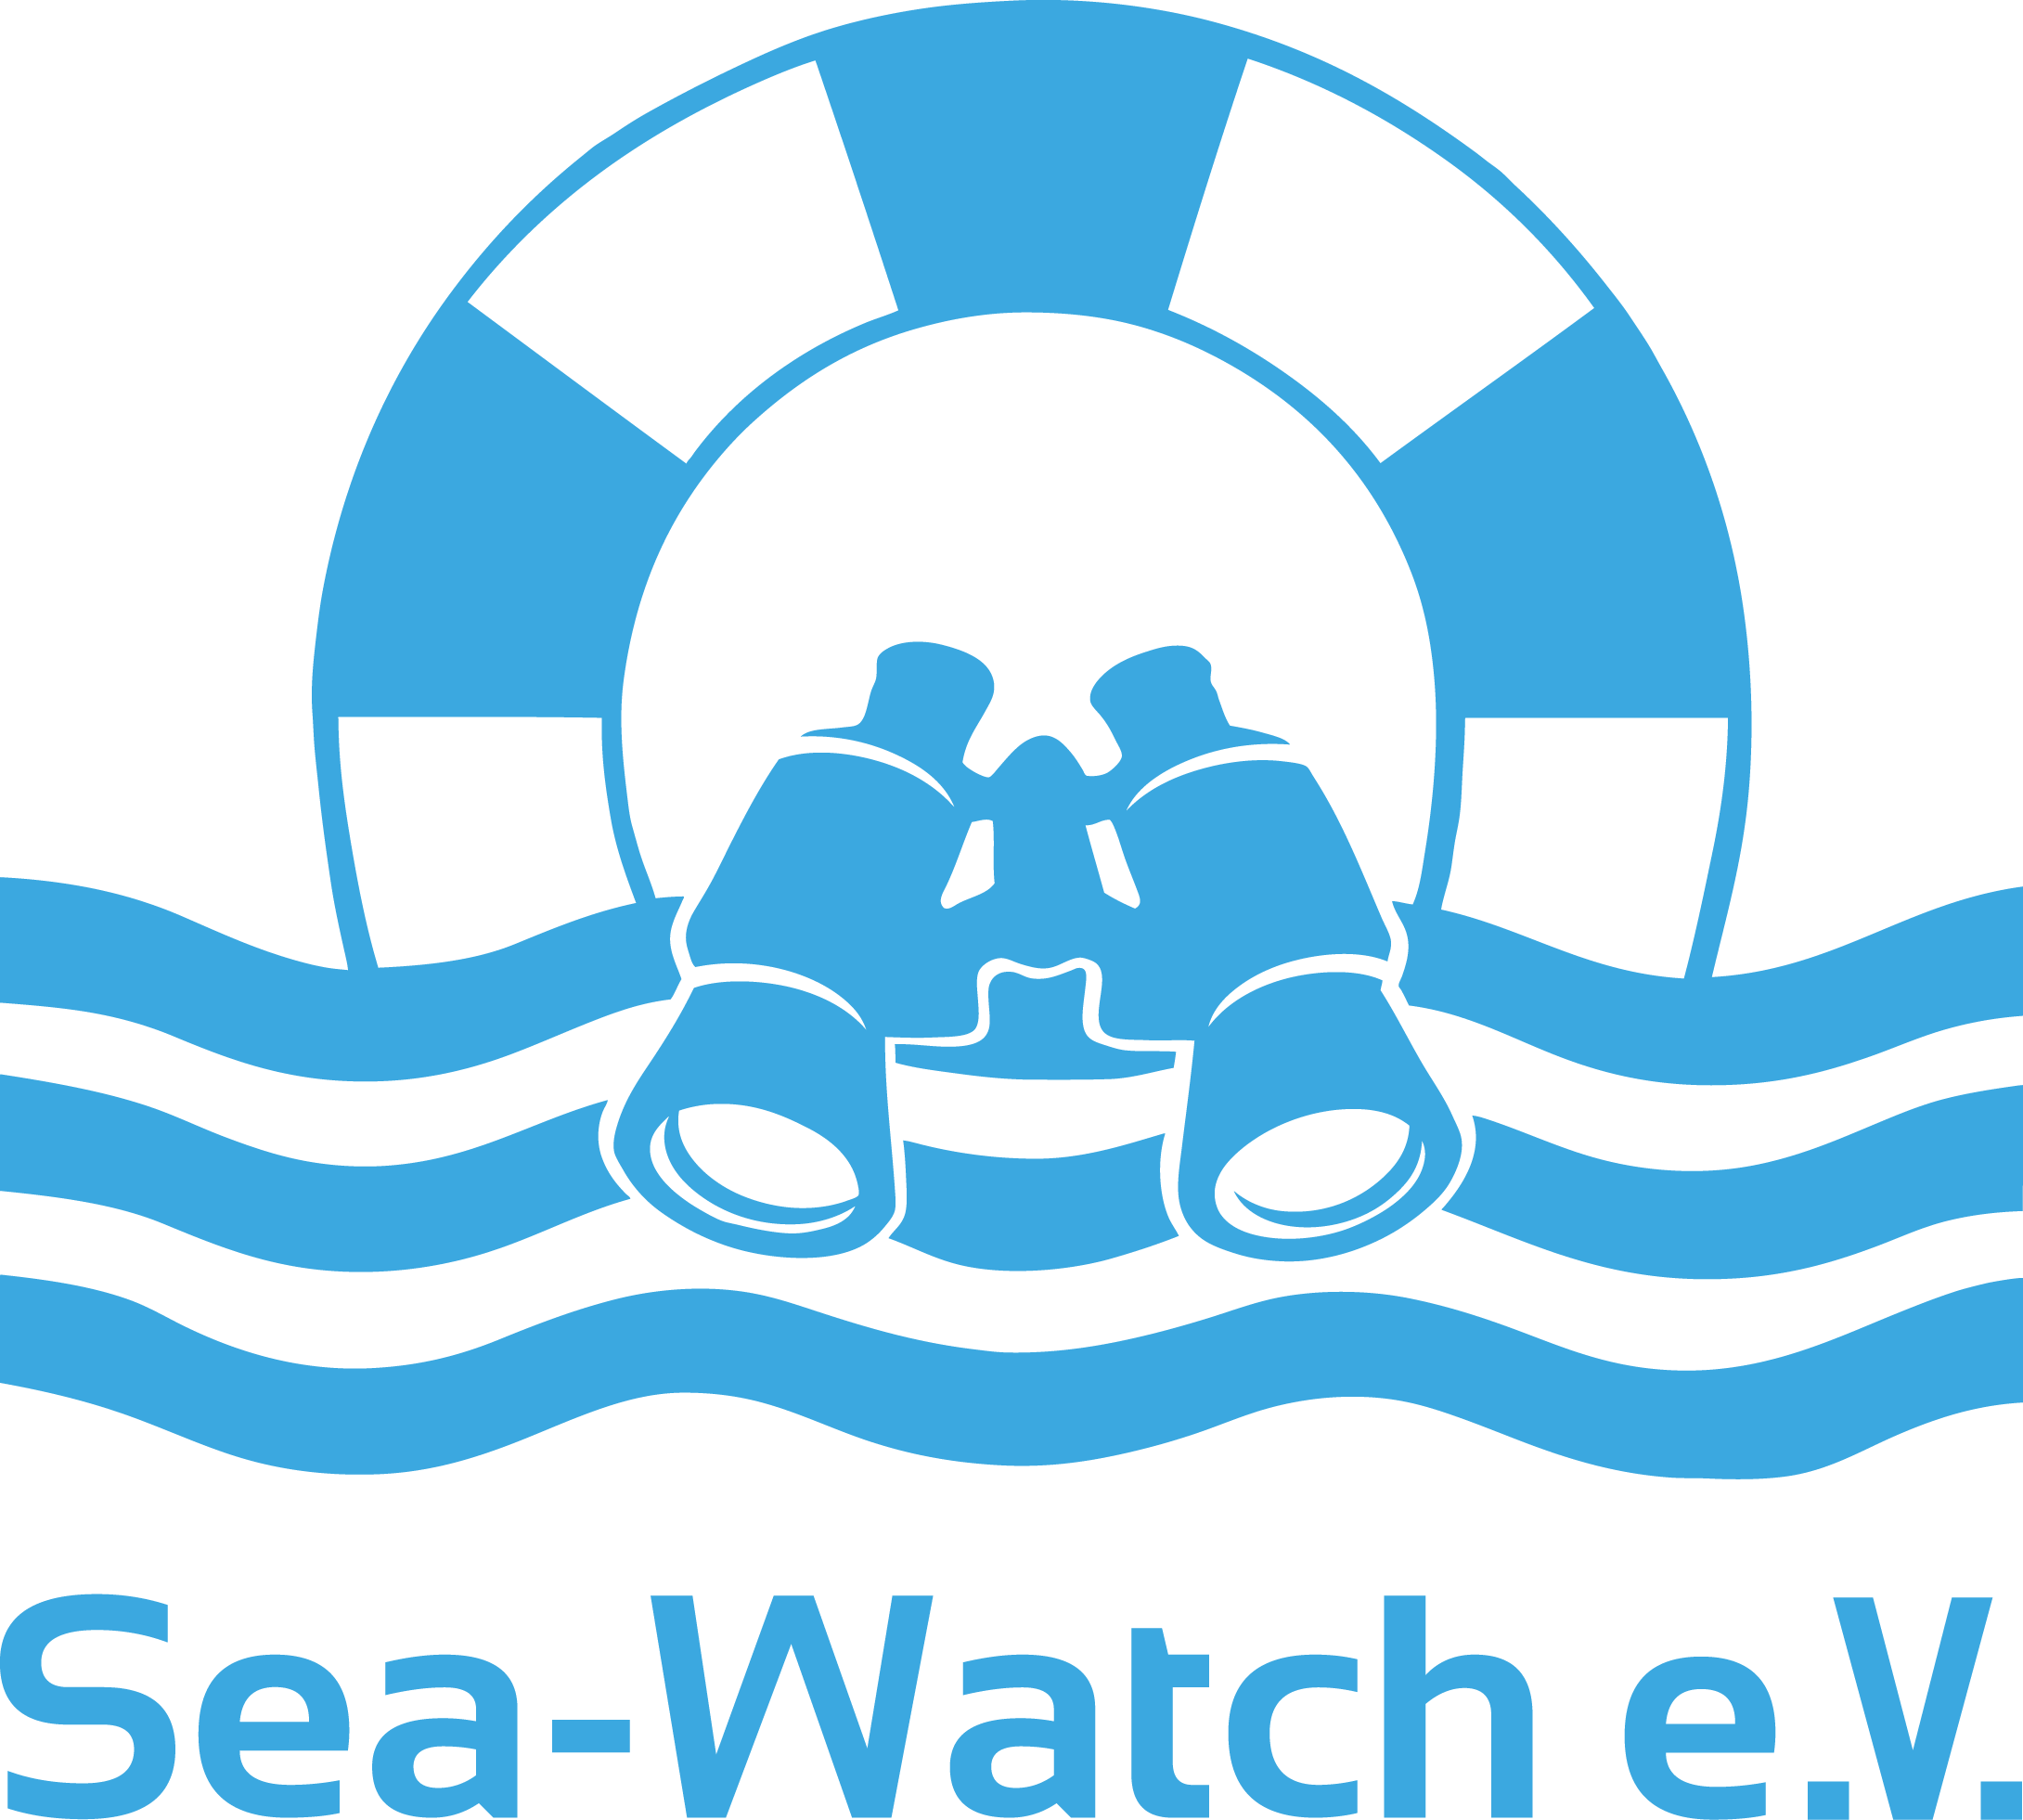 Sea-Watch